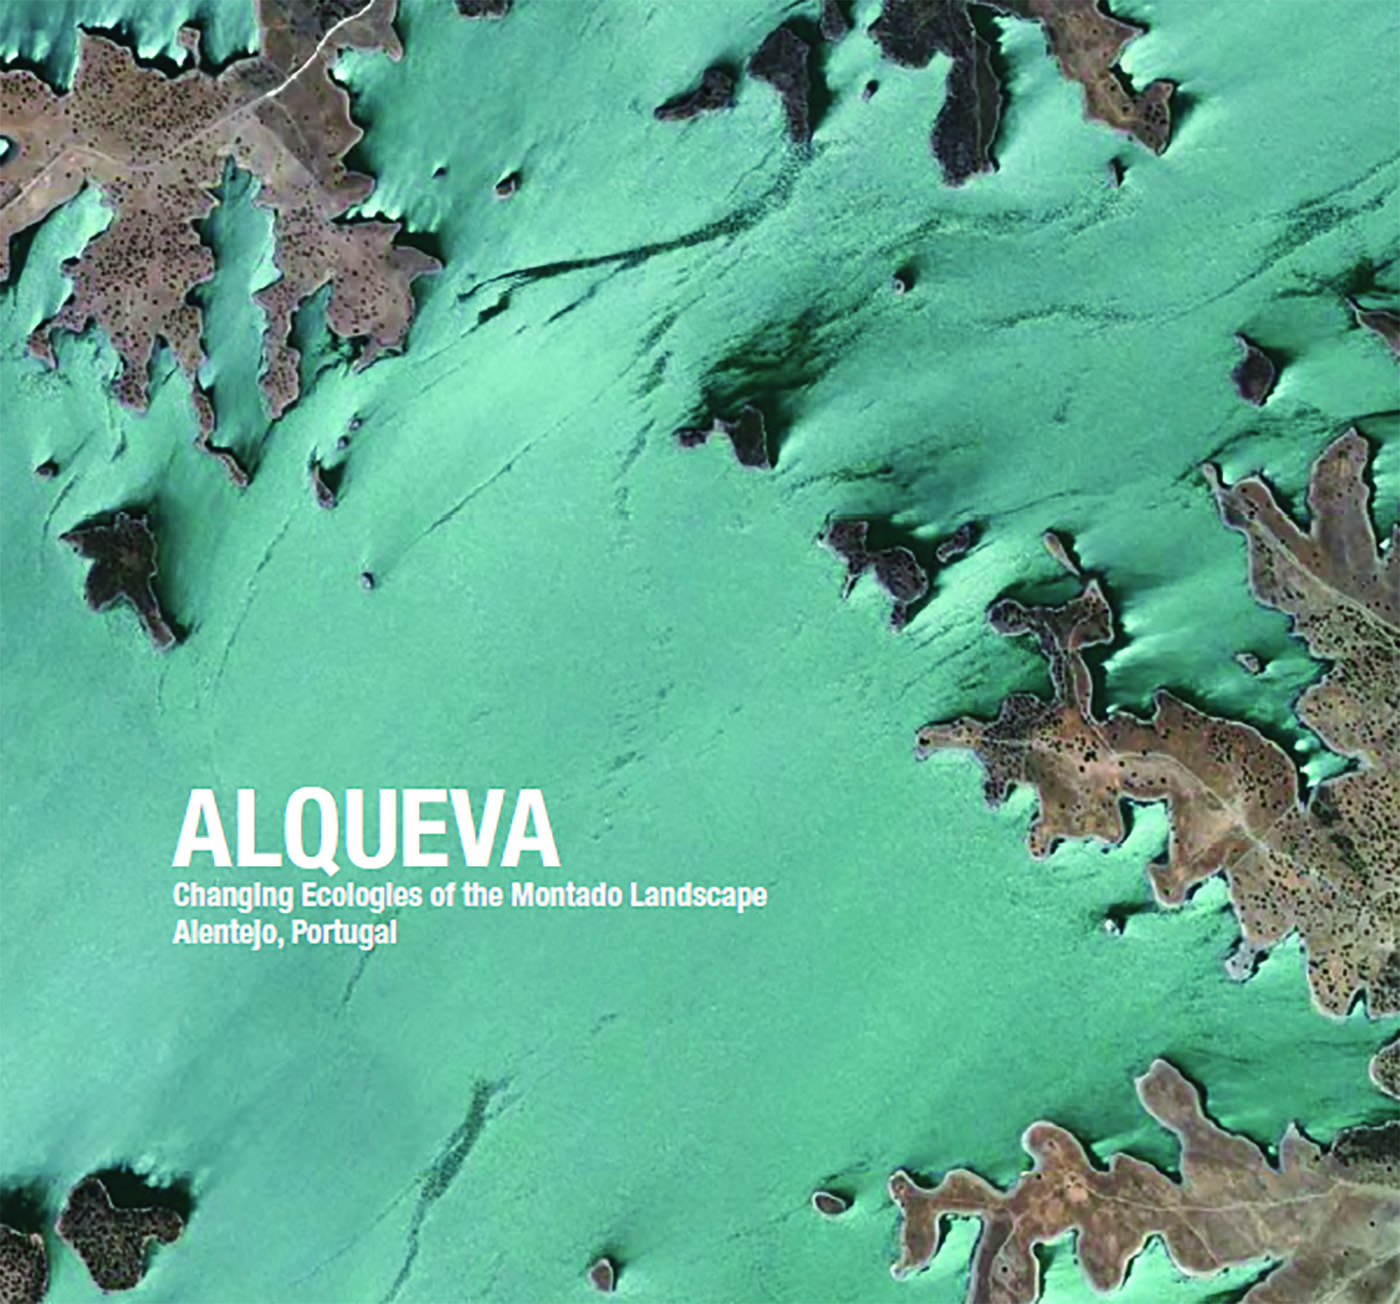 Alqueva: Changing Ecologies of the Montado Landscape